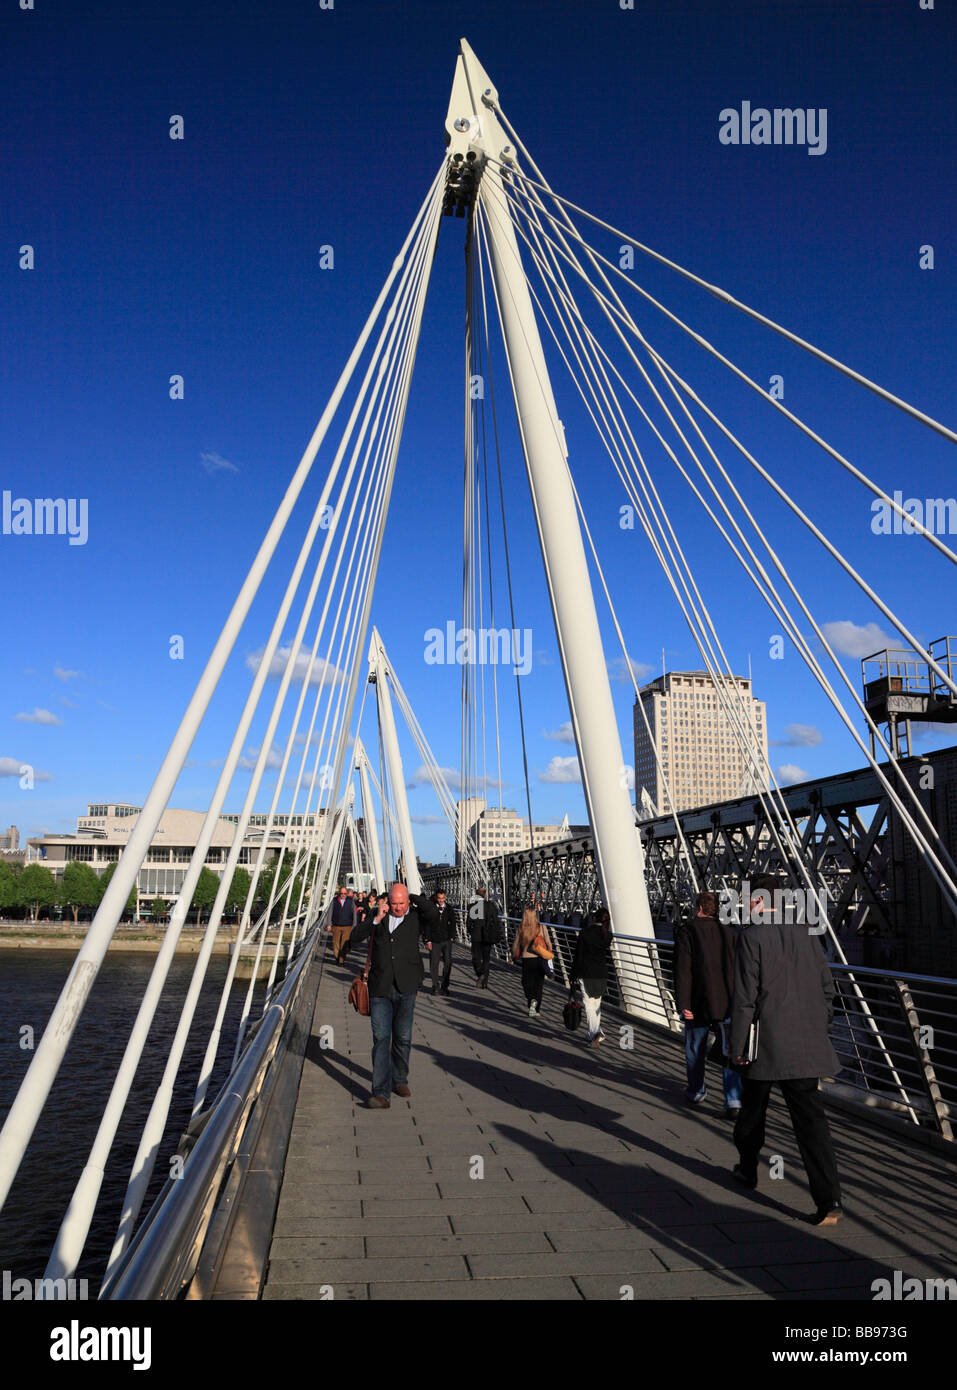 The Golden Jubilee Bridge pedestrian walkway. Hungerford Bridge, London, England, UK. Stock Photo